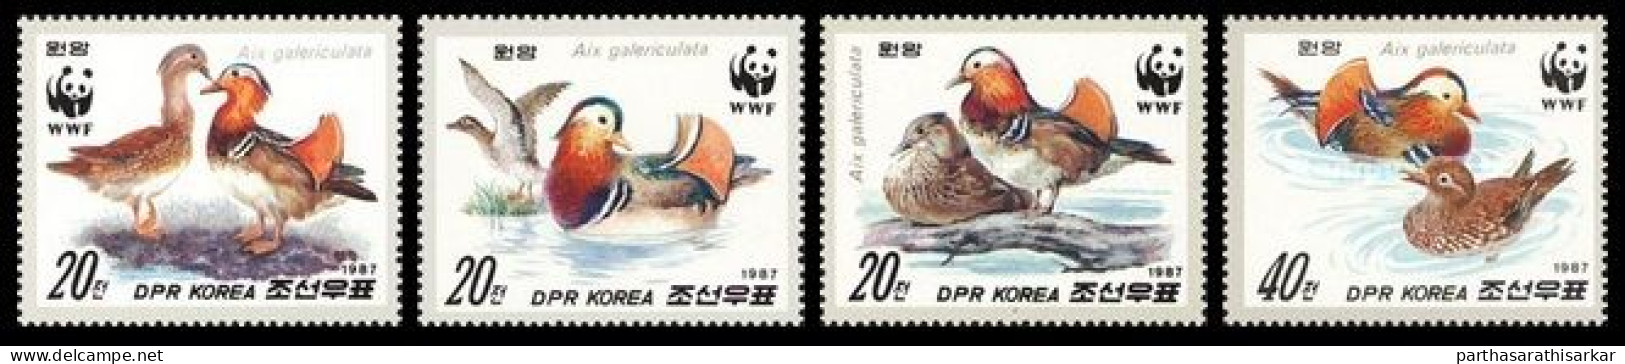 NORTH KOREA 1987 WWF WORLD NATURE CONSERVATION MANDARIN DUCKS COMPLETE SET MNH - Nuovi